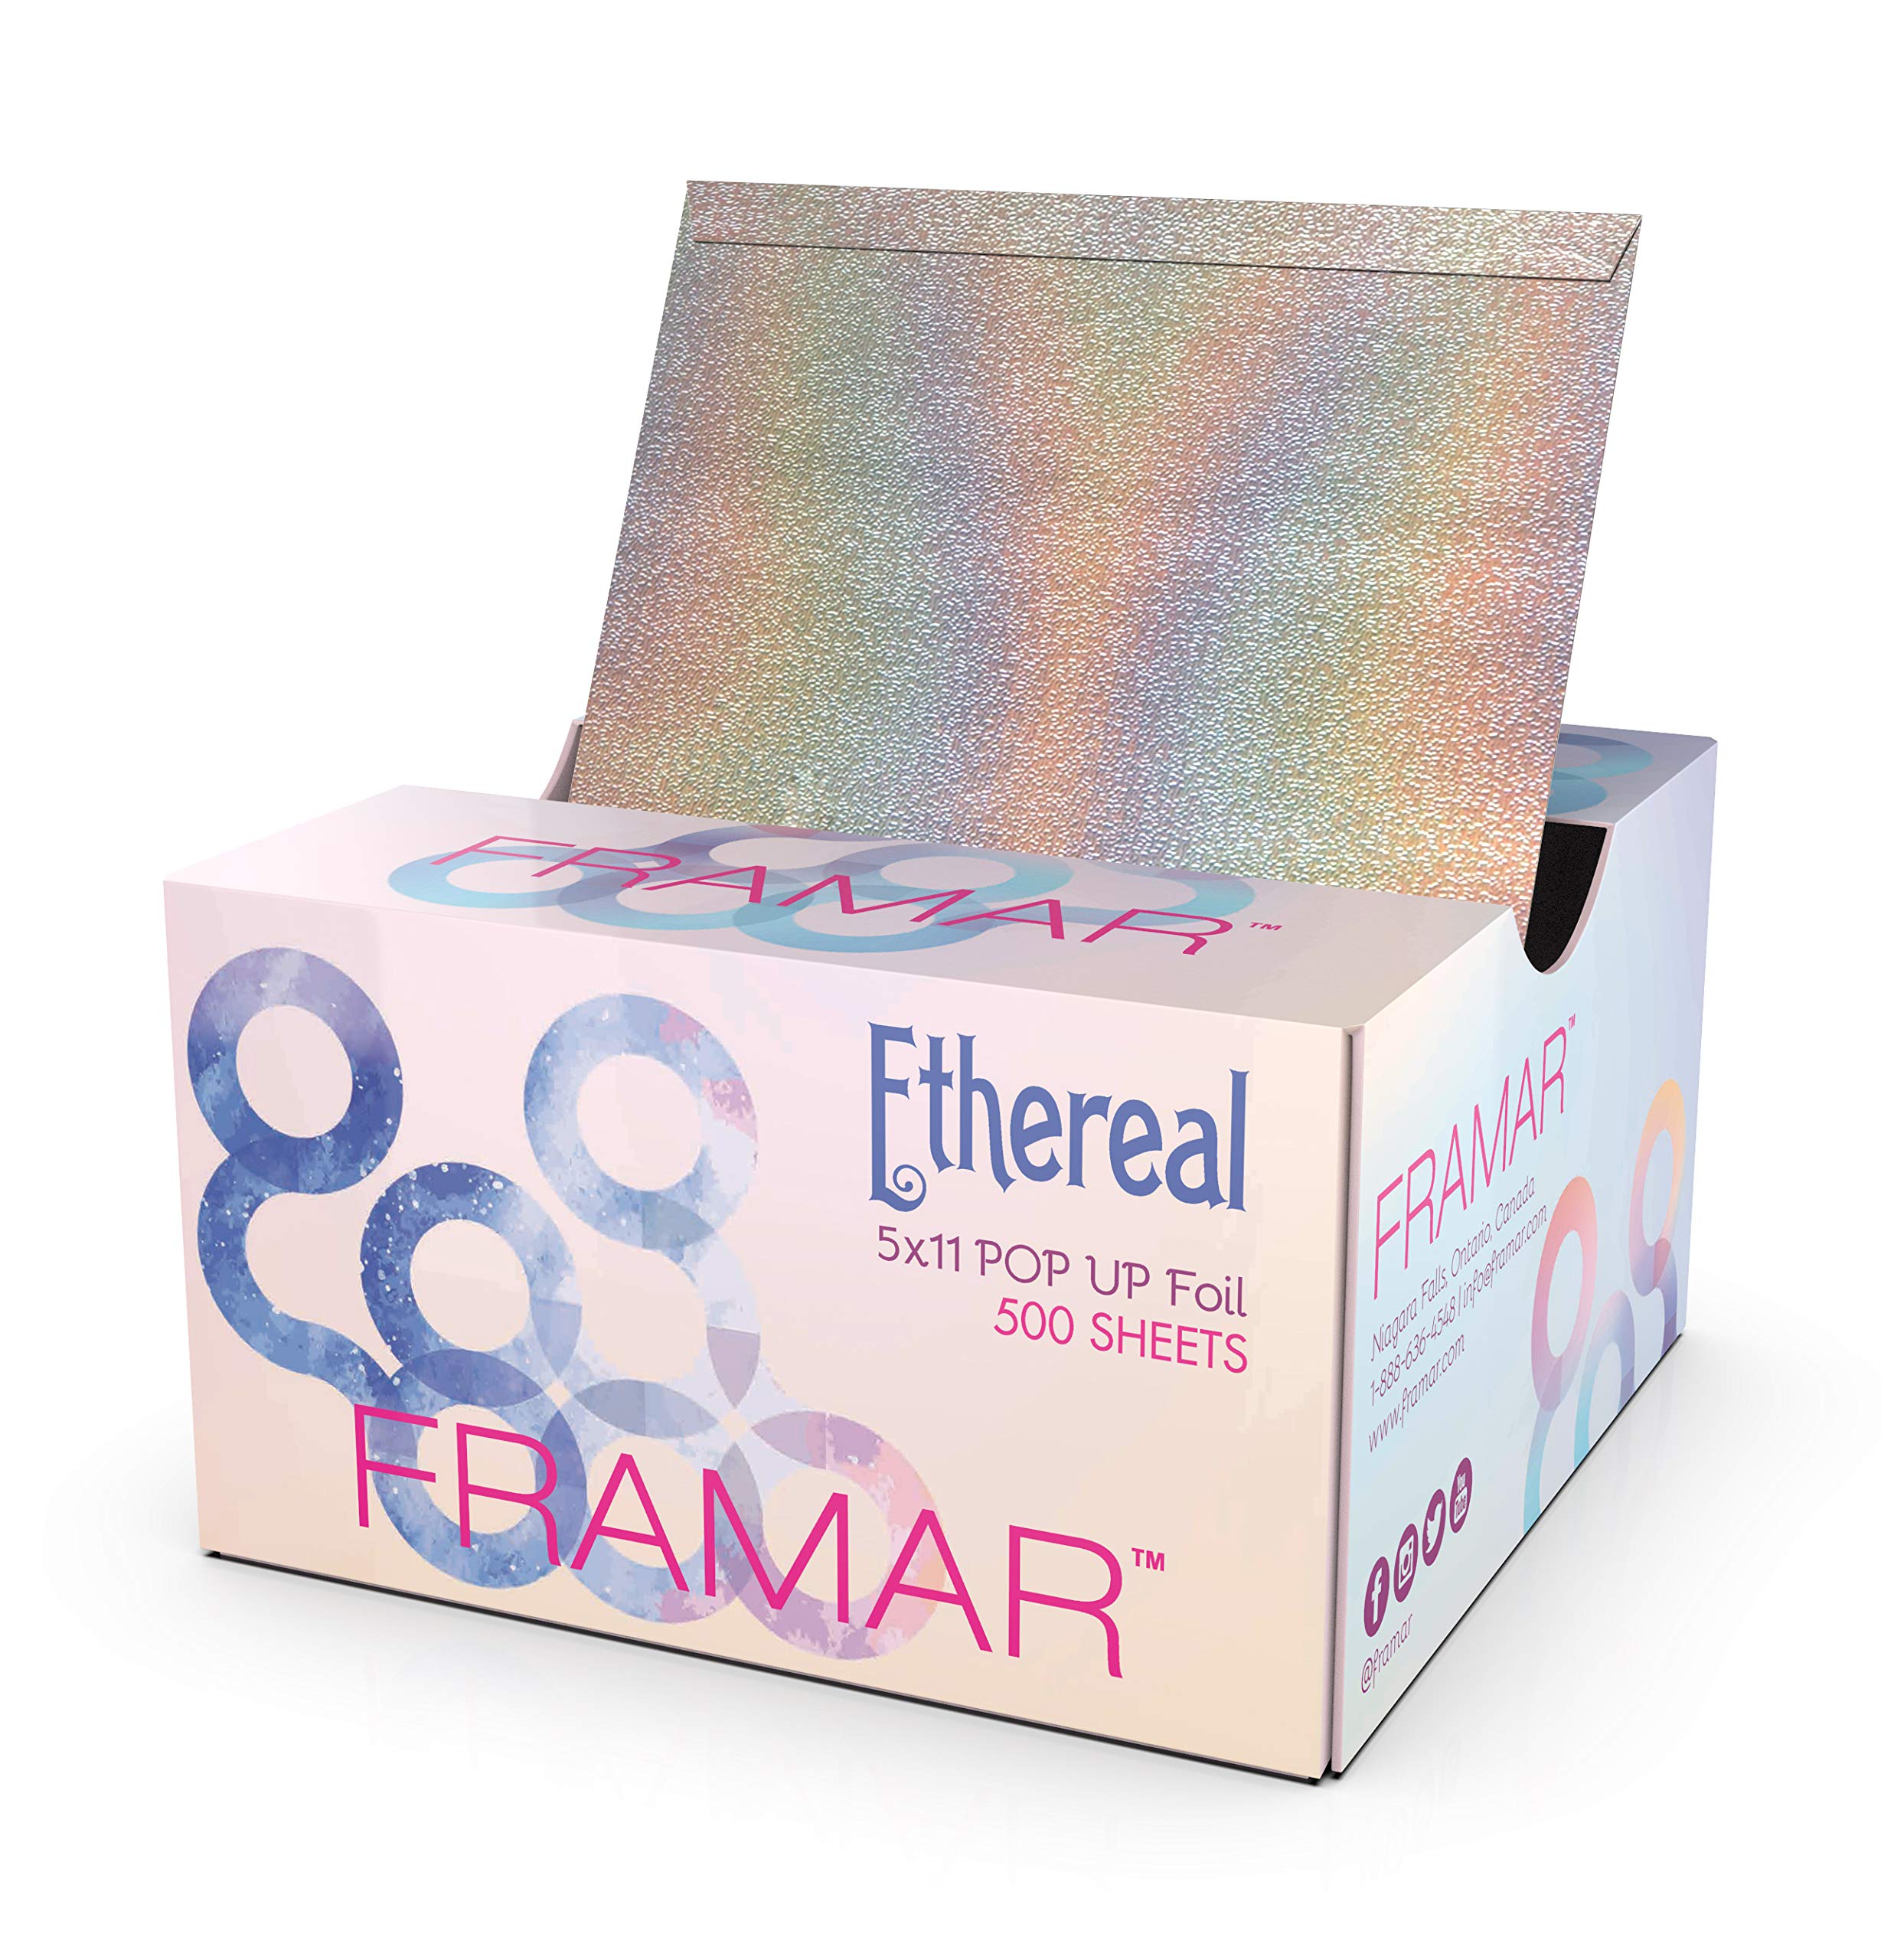 Framar Party Animal Pop Up Hair Foil, Aluminum Foil Sheets, Hair Foils For  Highlighting - 500 Foil Sheets